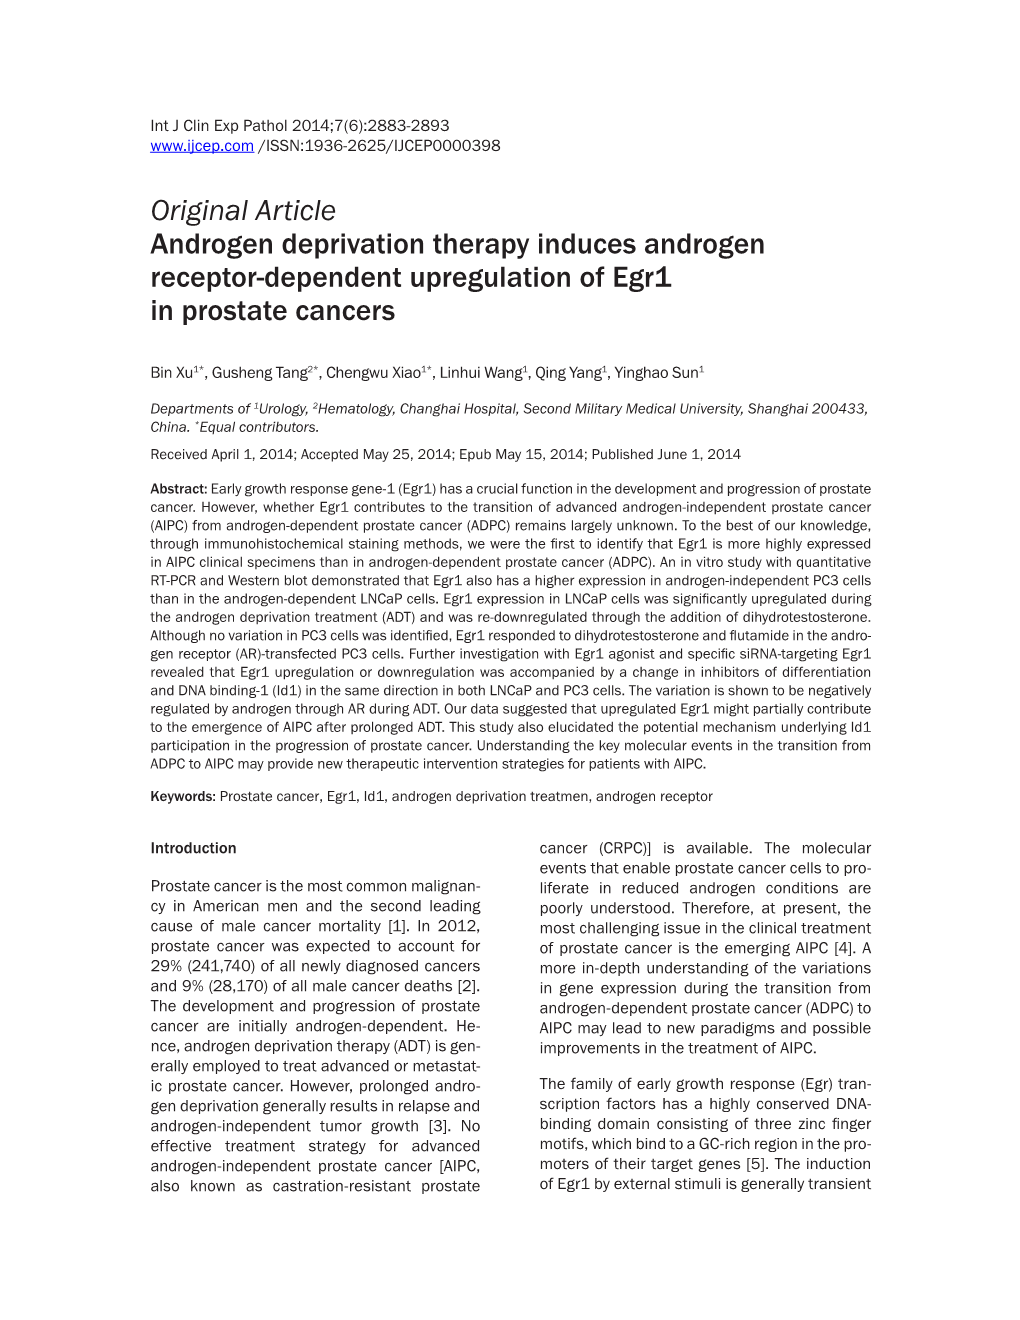 Original Article Androgen Deprivation Therapy Induces Androgen Receptor-Dependent Upregulation of Egr1 in Prostate Cancers